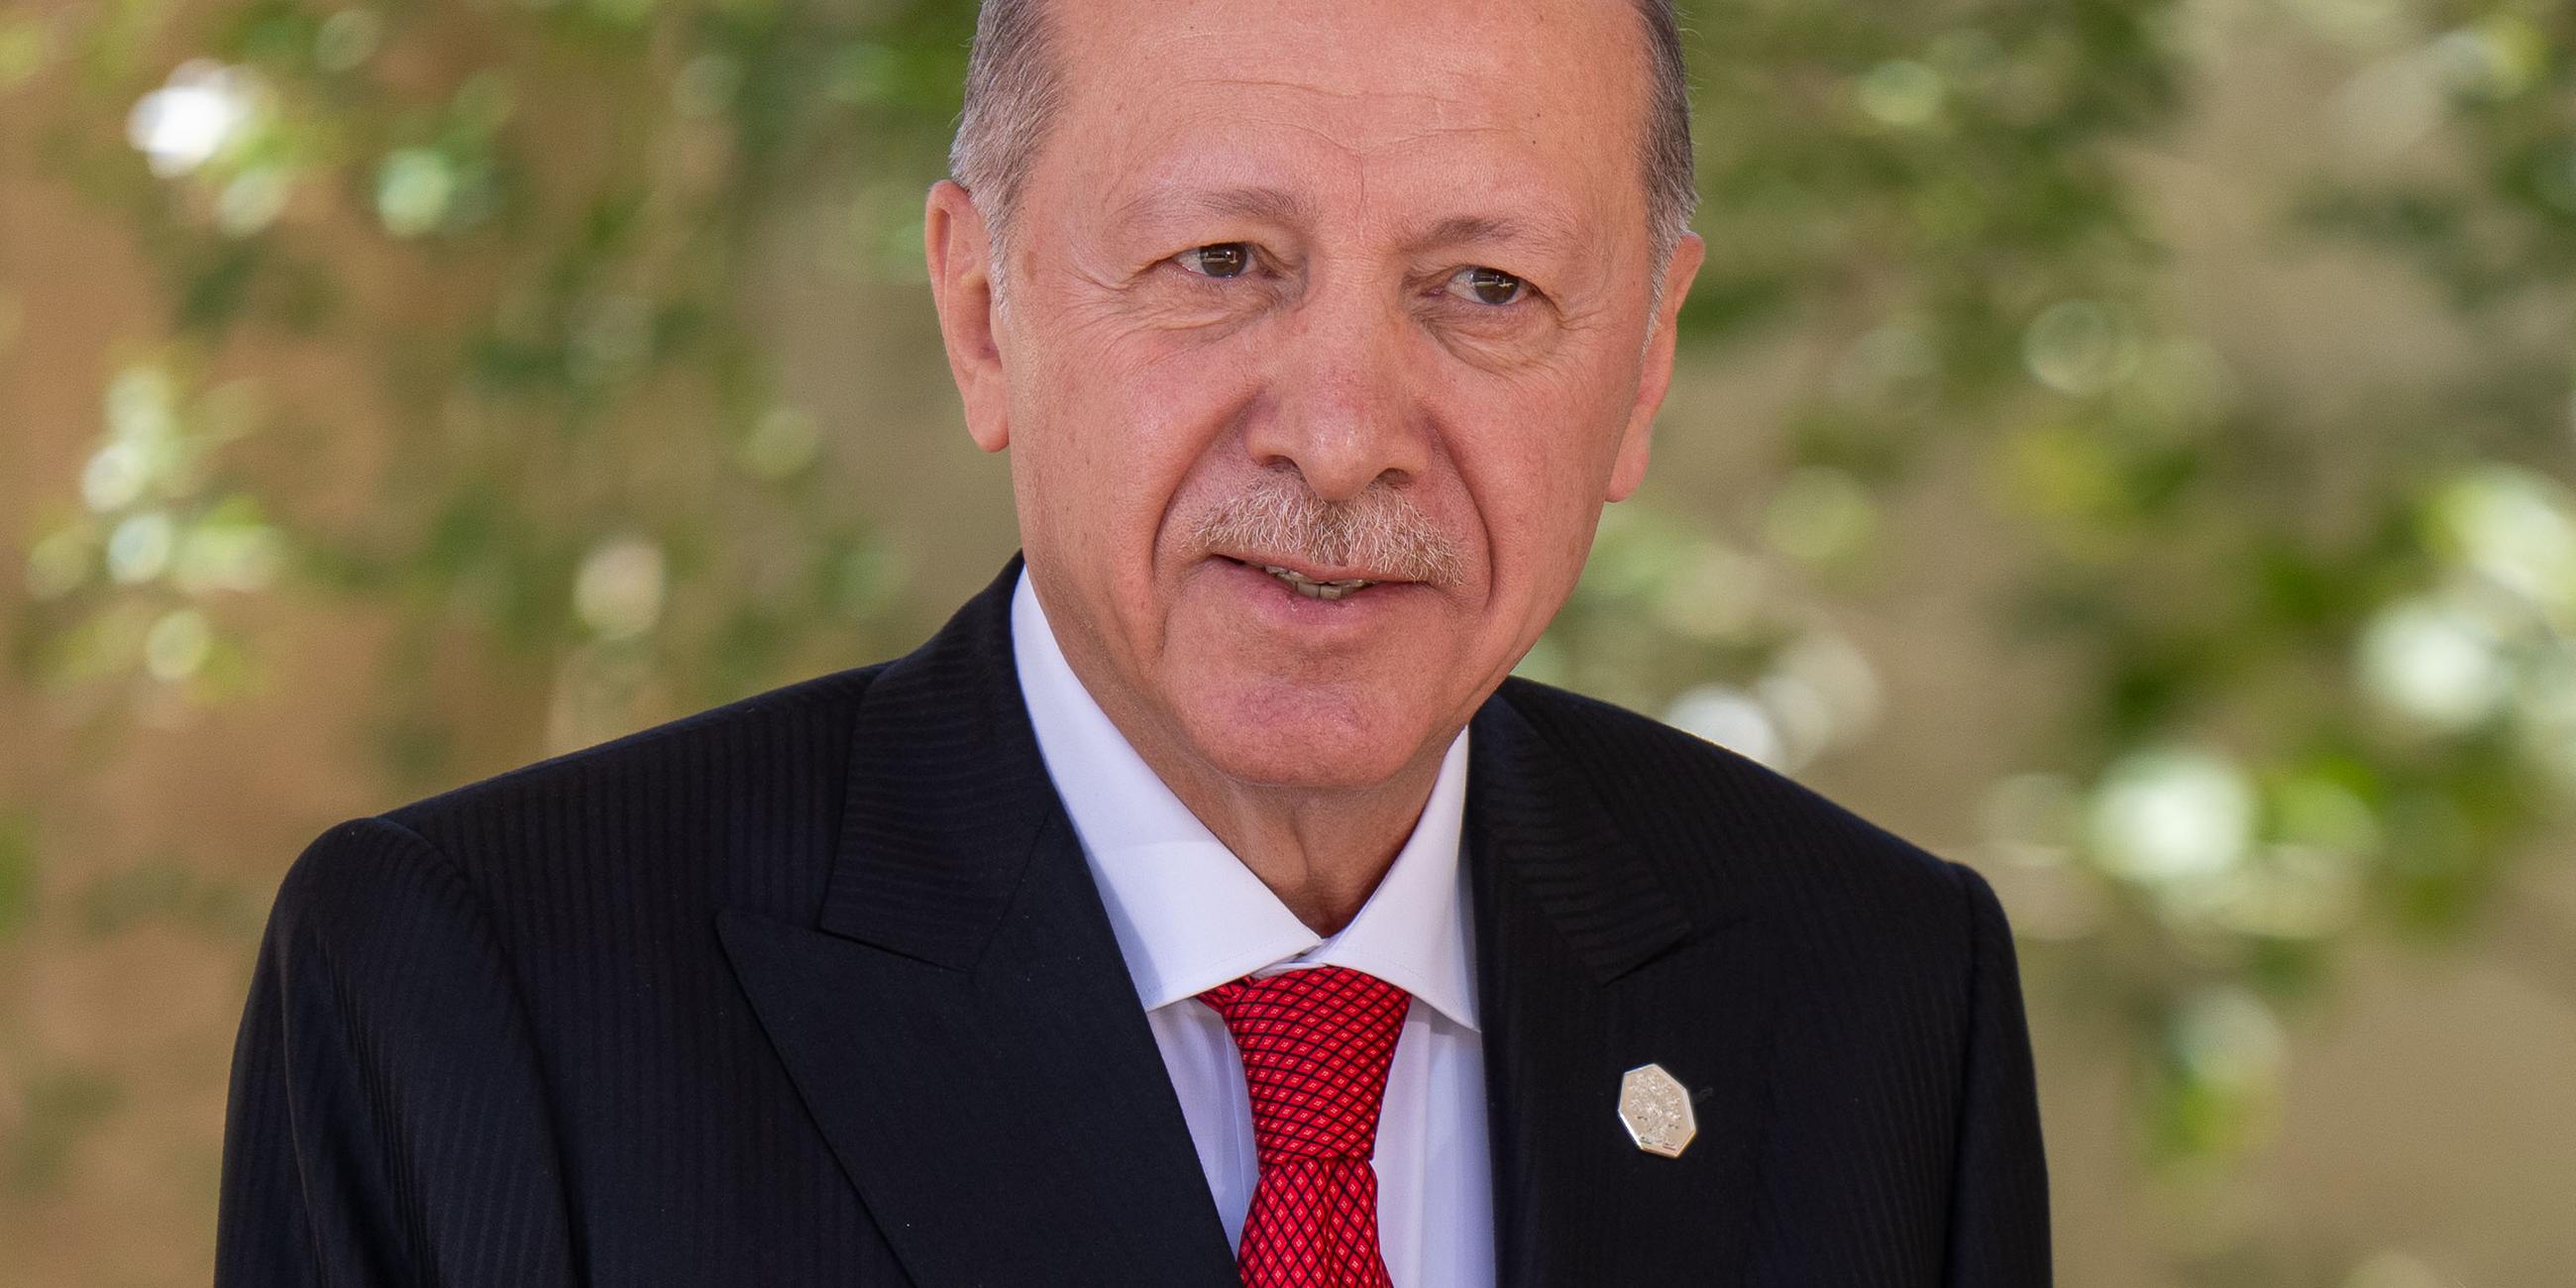 Italien, Bari: Recep Tayyip Erdogan, Präsident der Türkei